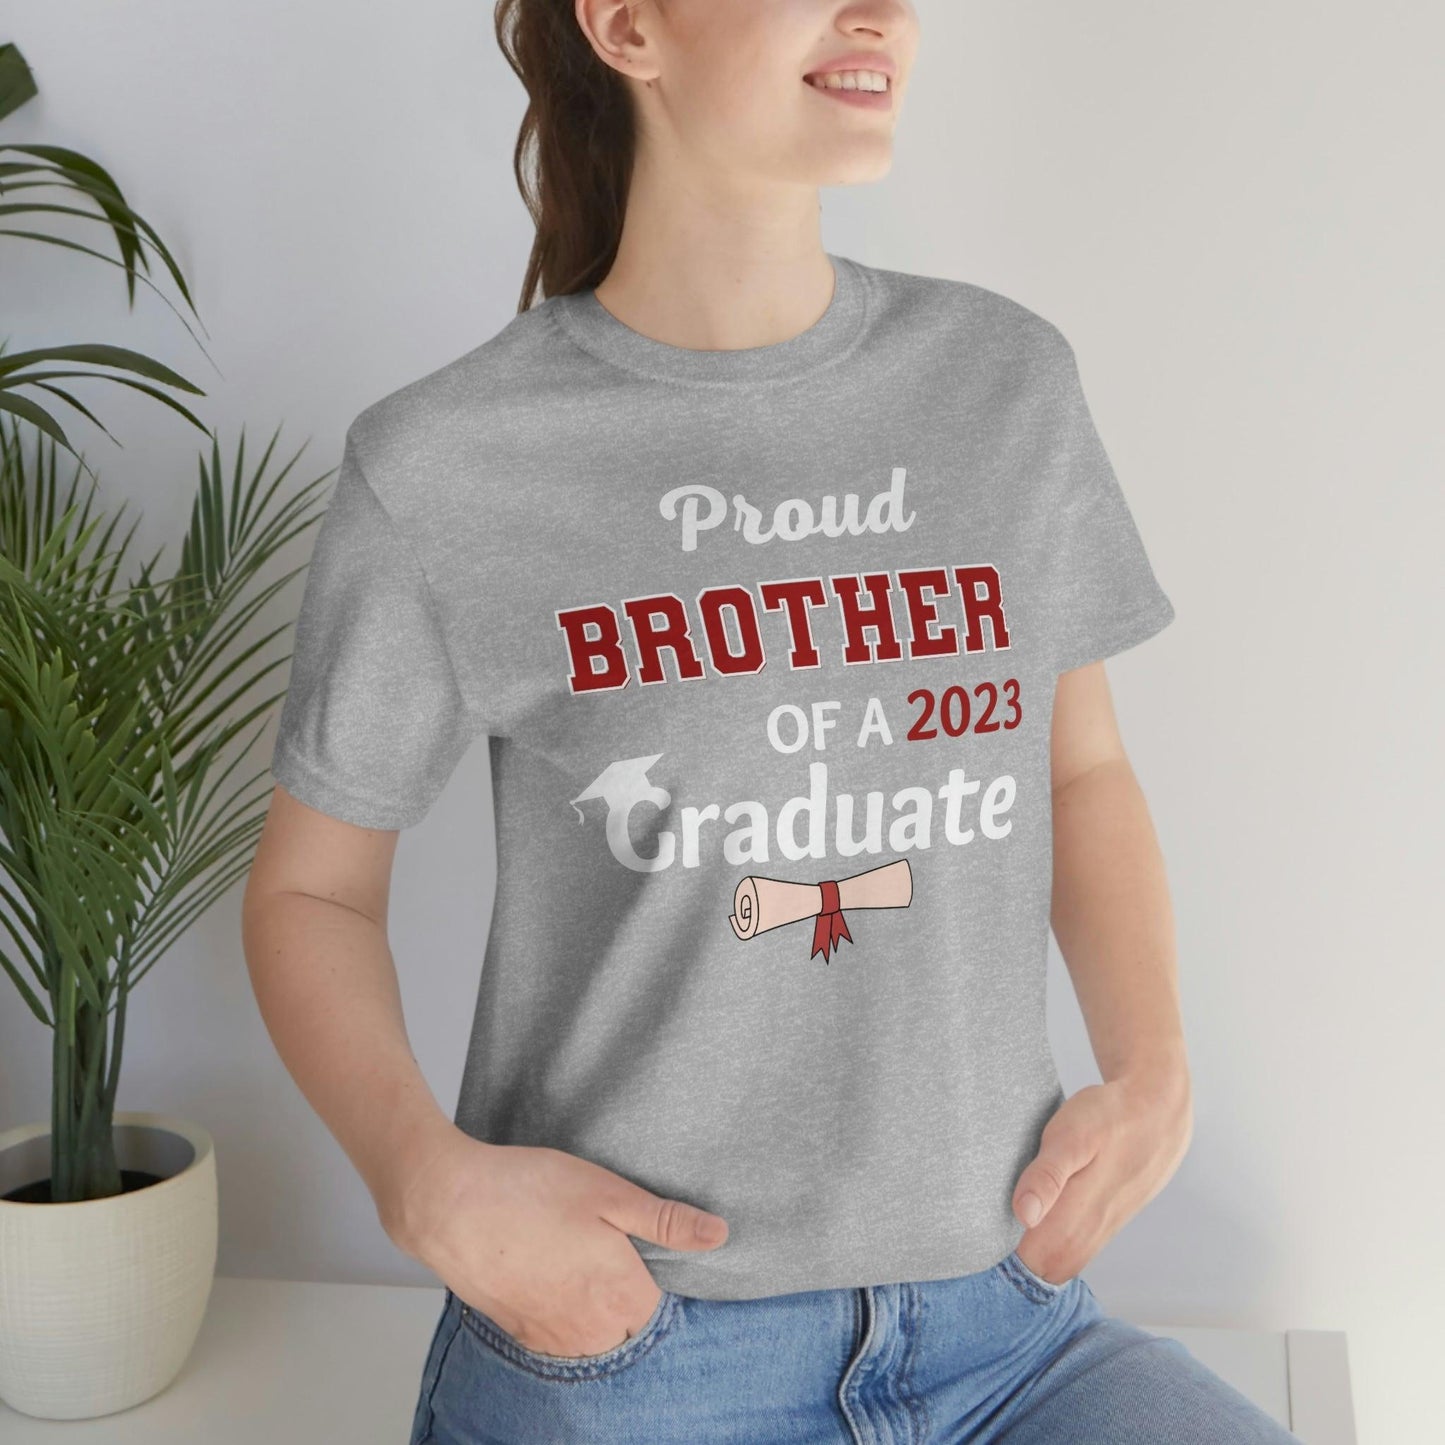 Proud Brother of a graduate - Graduation shirt - Graduation gift - Giftsmojo